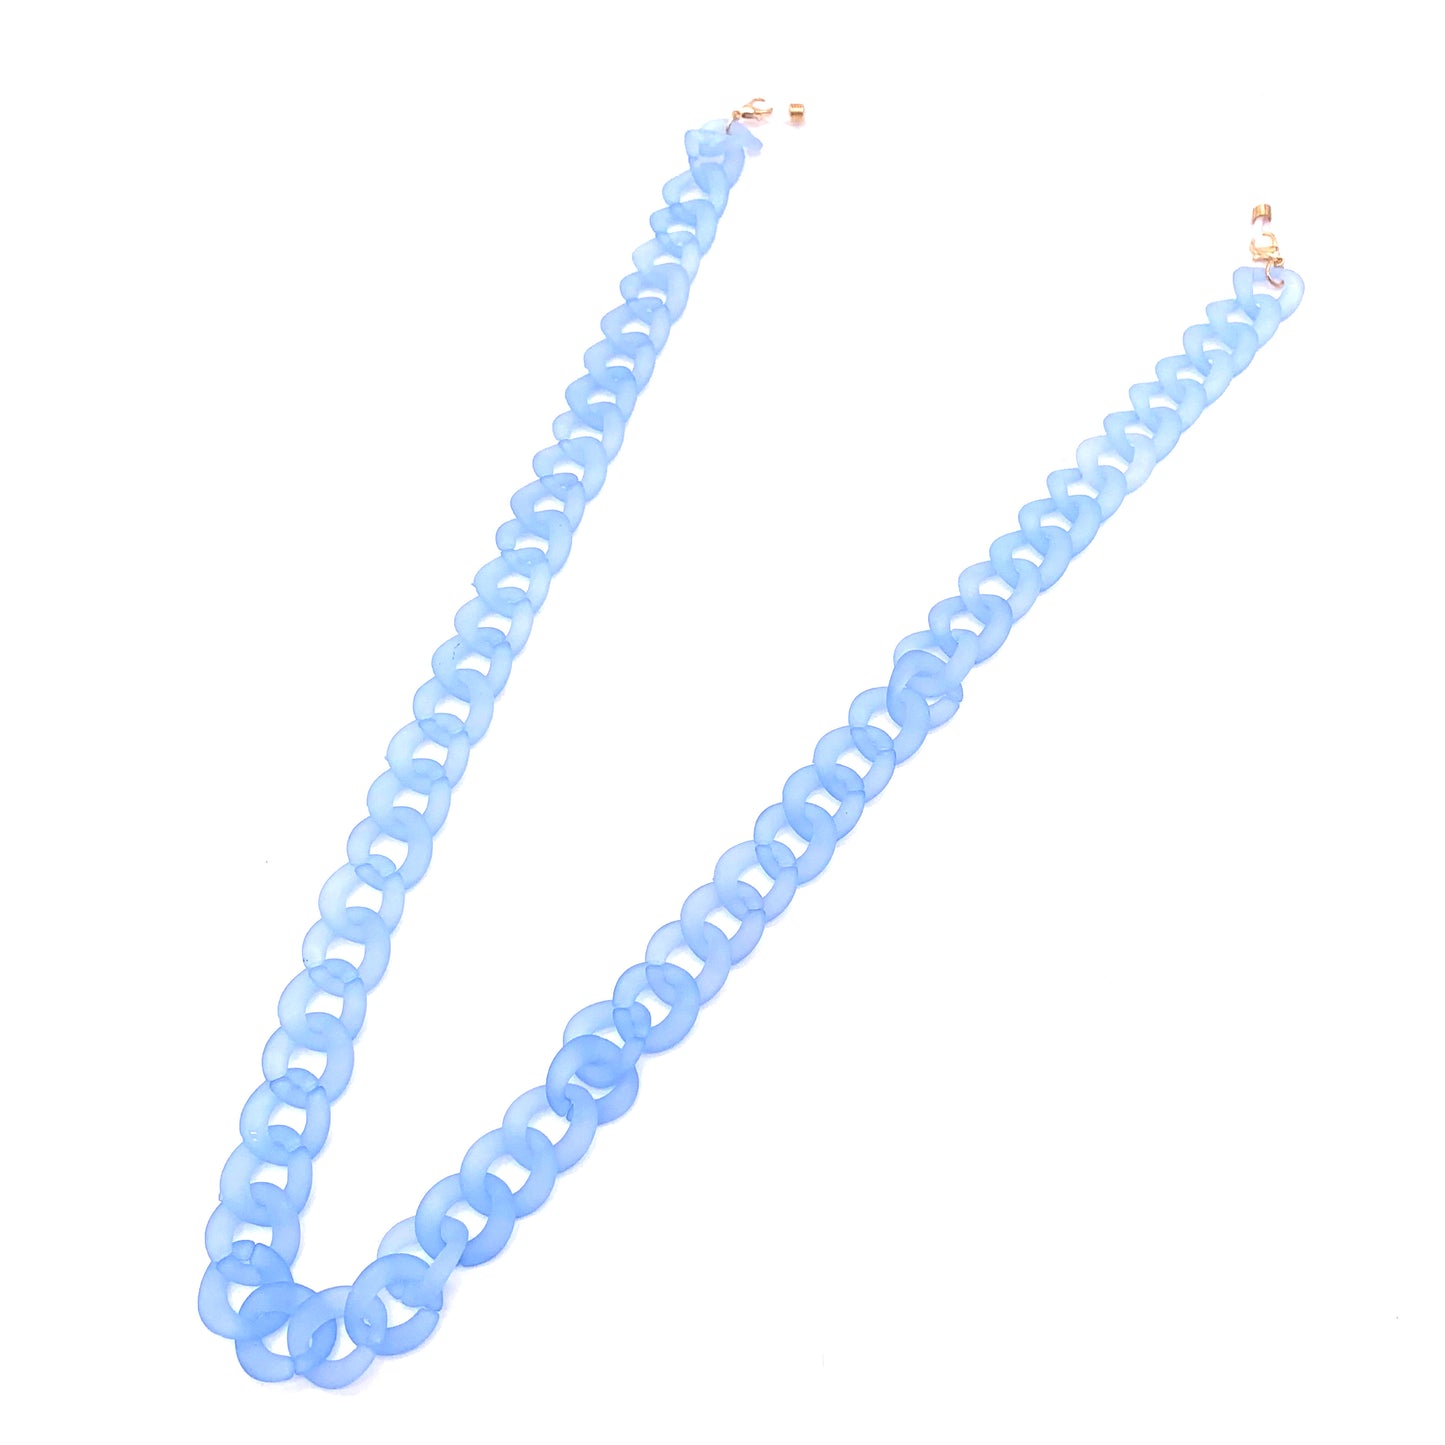 00106.1 Basic Chain Holder- Candy